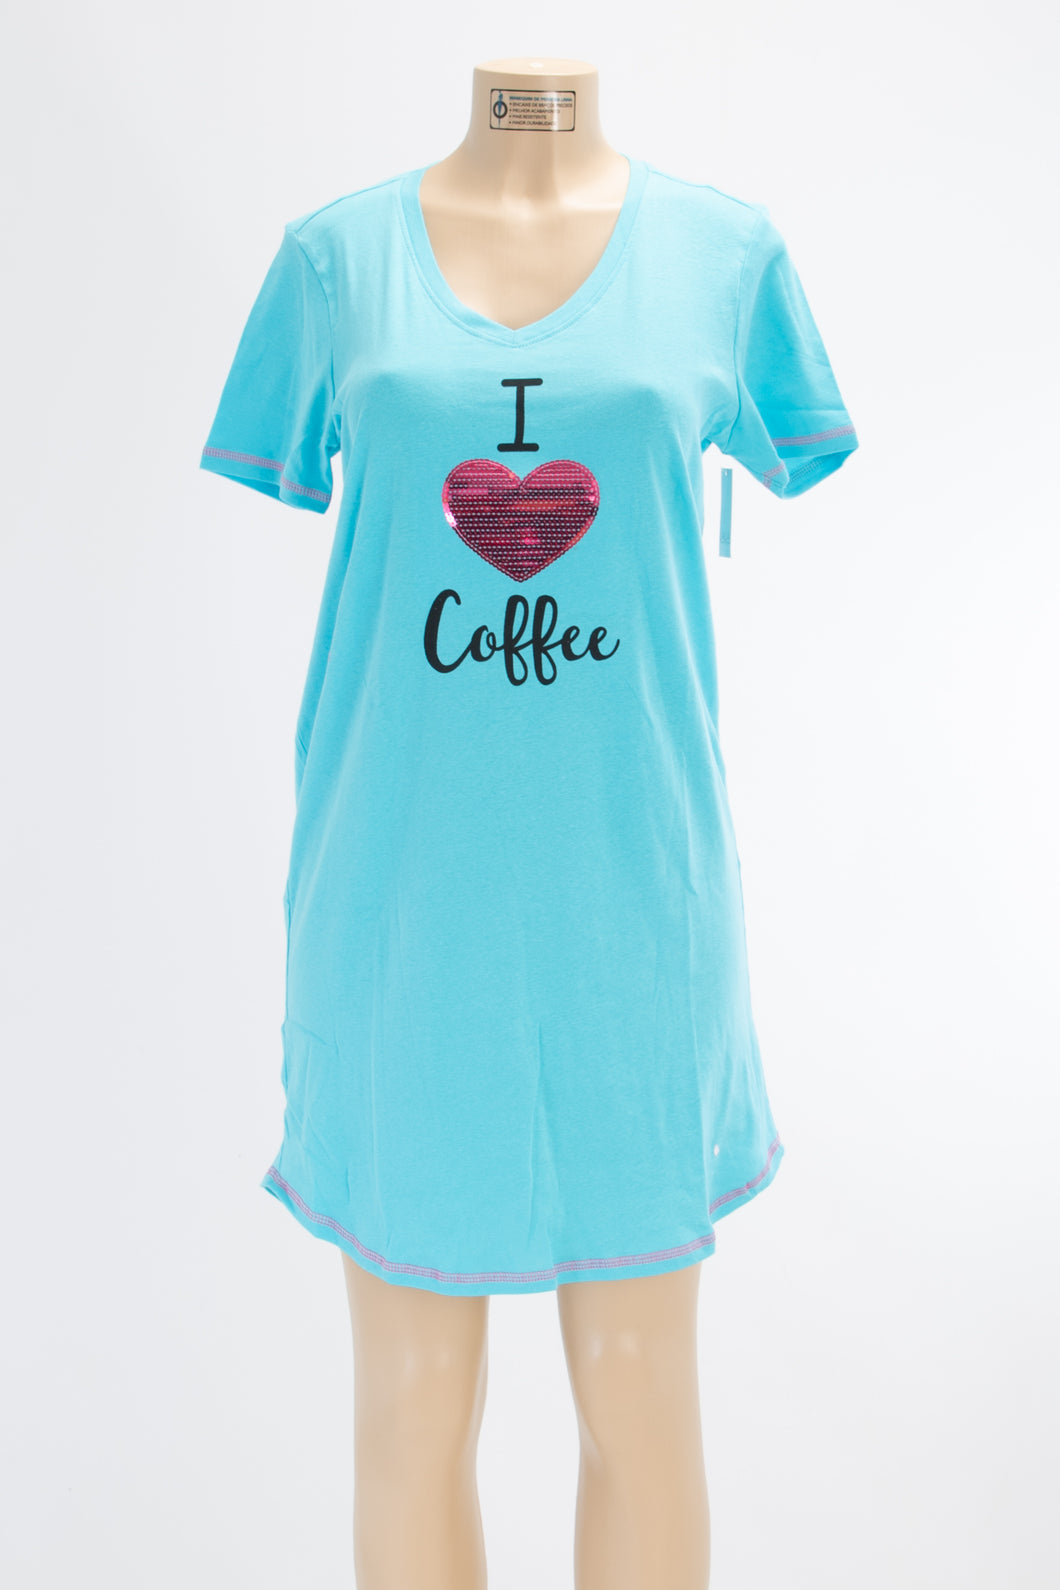 “I Love Coffee” Night Shirt